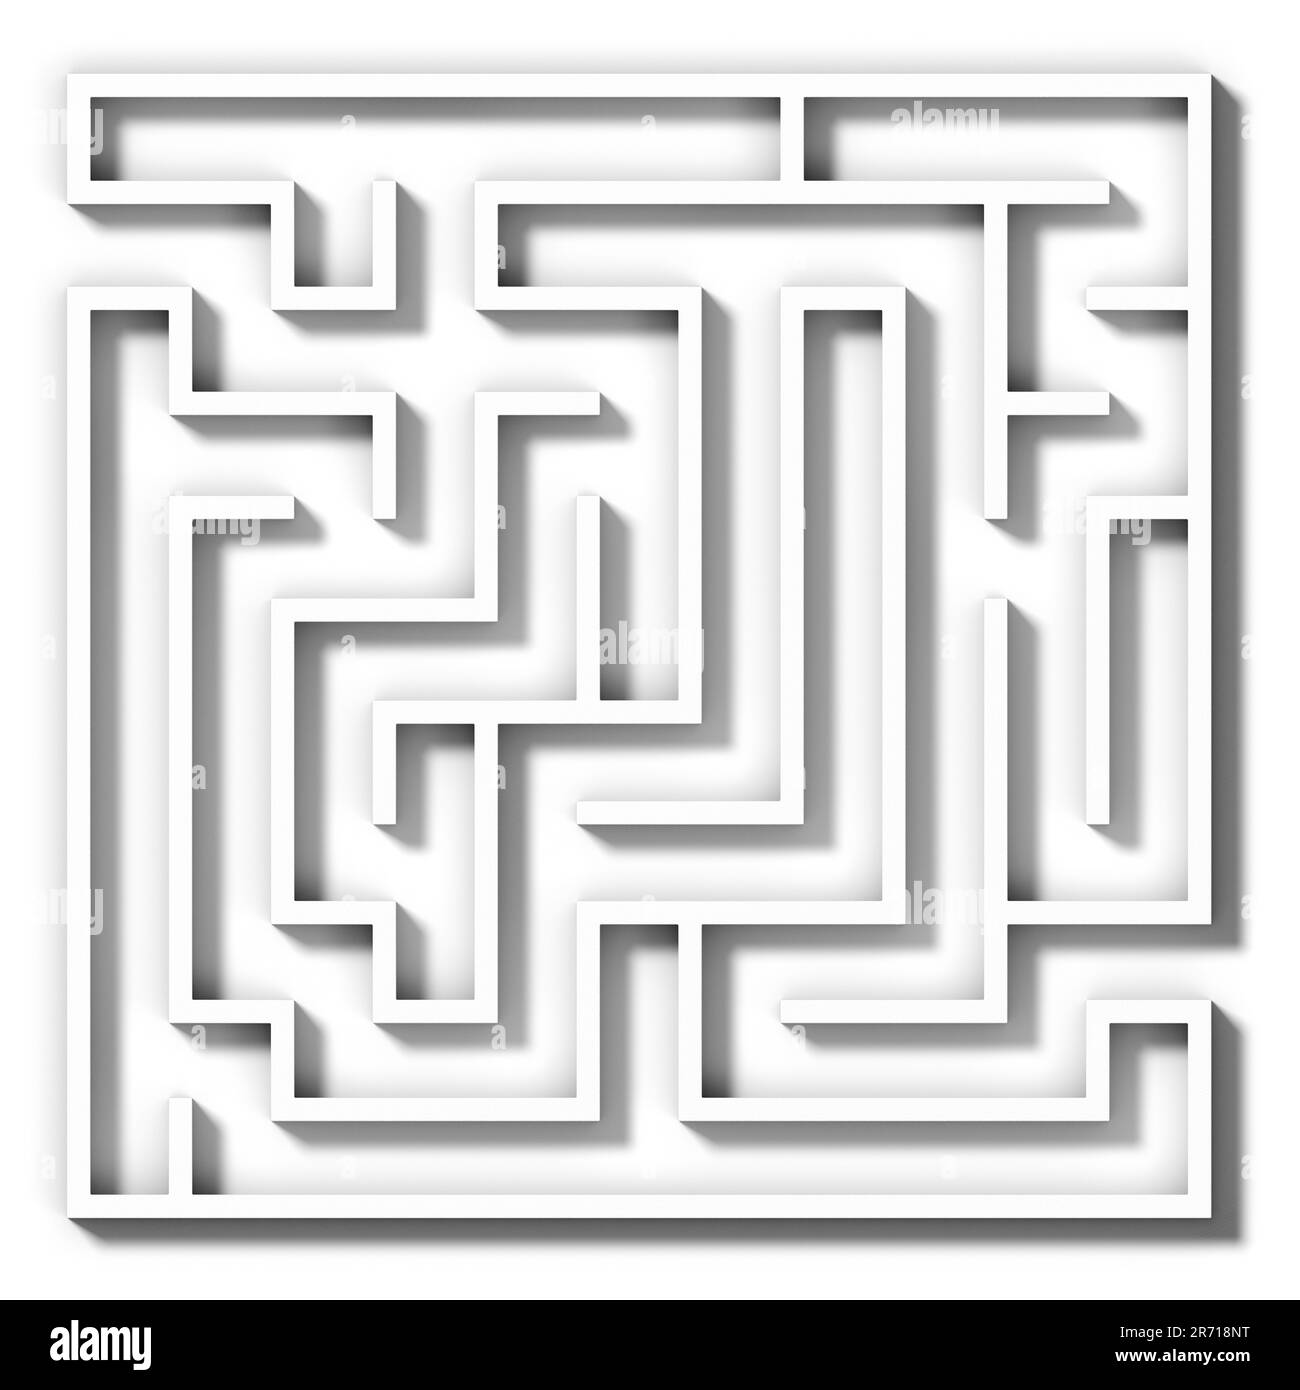 White maze. Abstract illustration. 3d illustration. Stock Photo